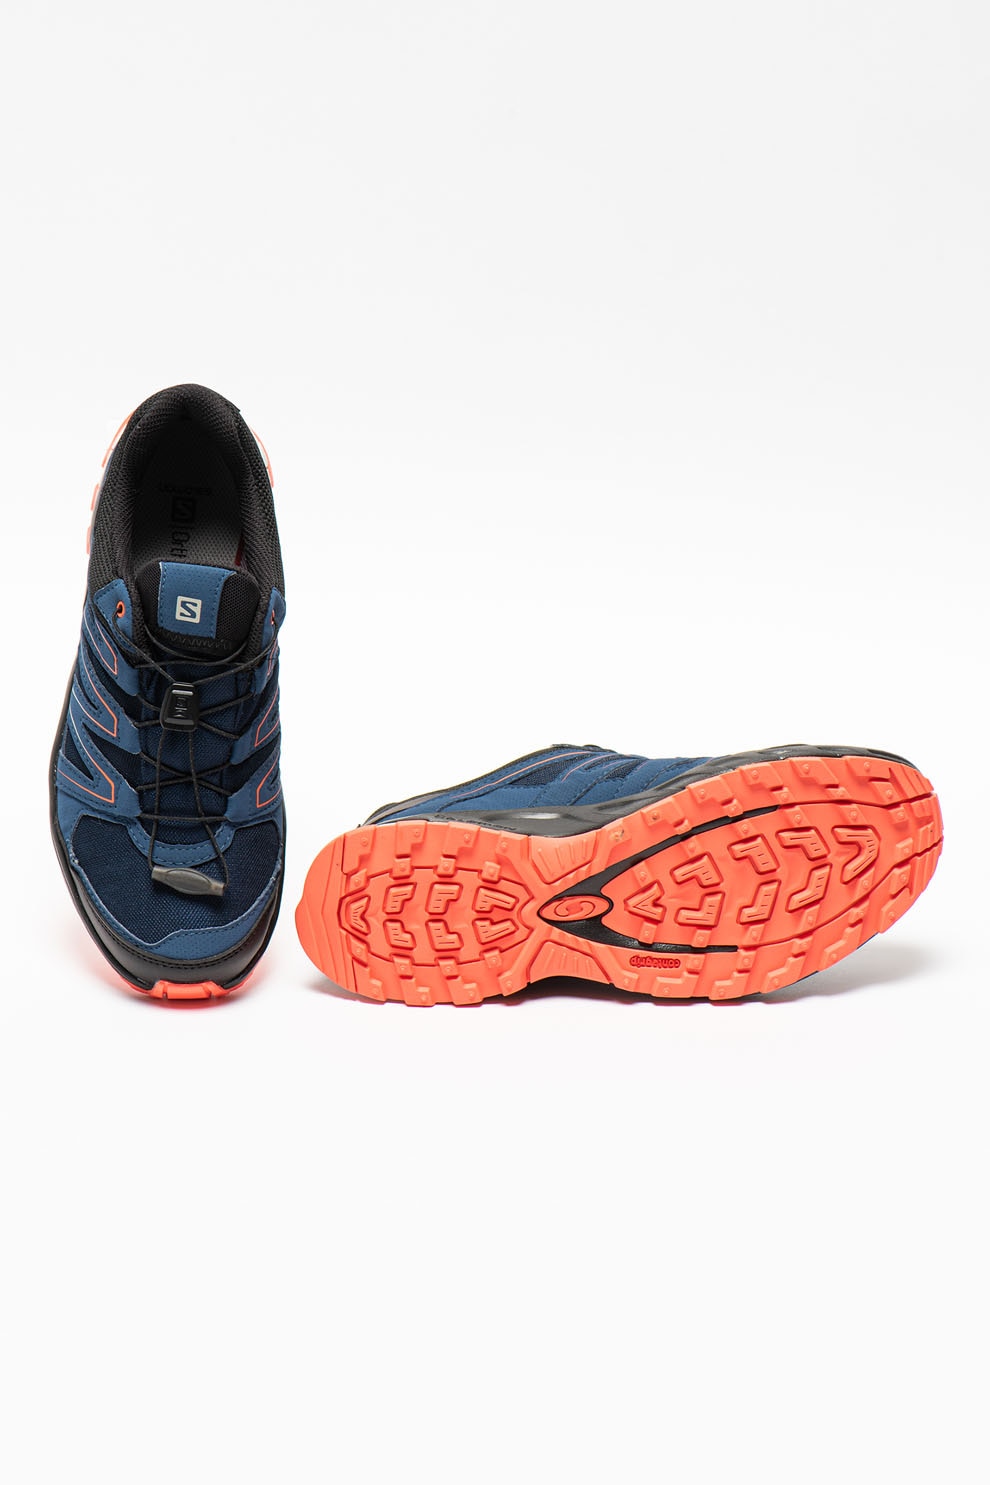 Lad os gøre det For pokker Breddegrad Salomon, Pantofi impermeabili pentru alergare SOLLIA GTX, Albastru inchis,  6 - eMAG.ro